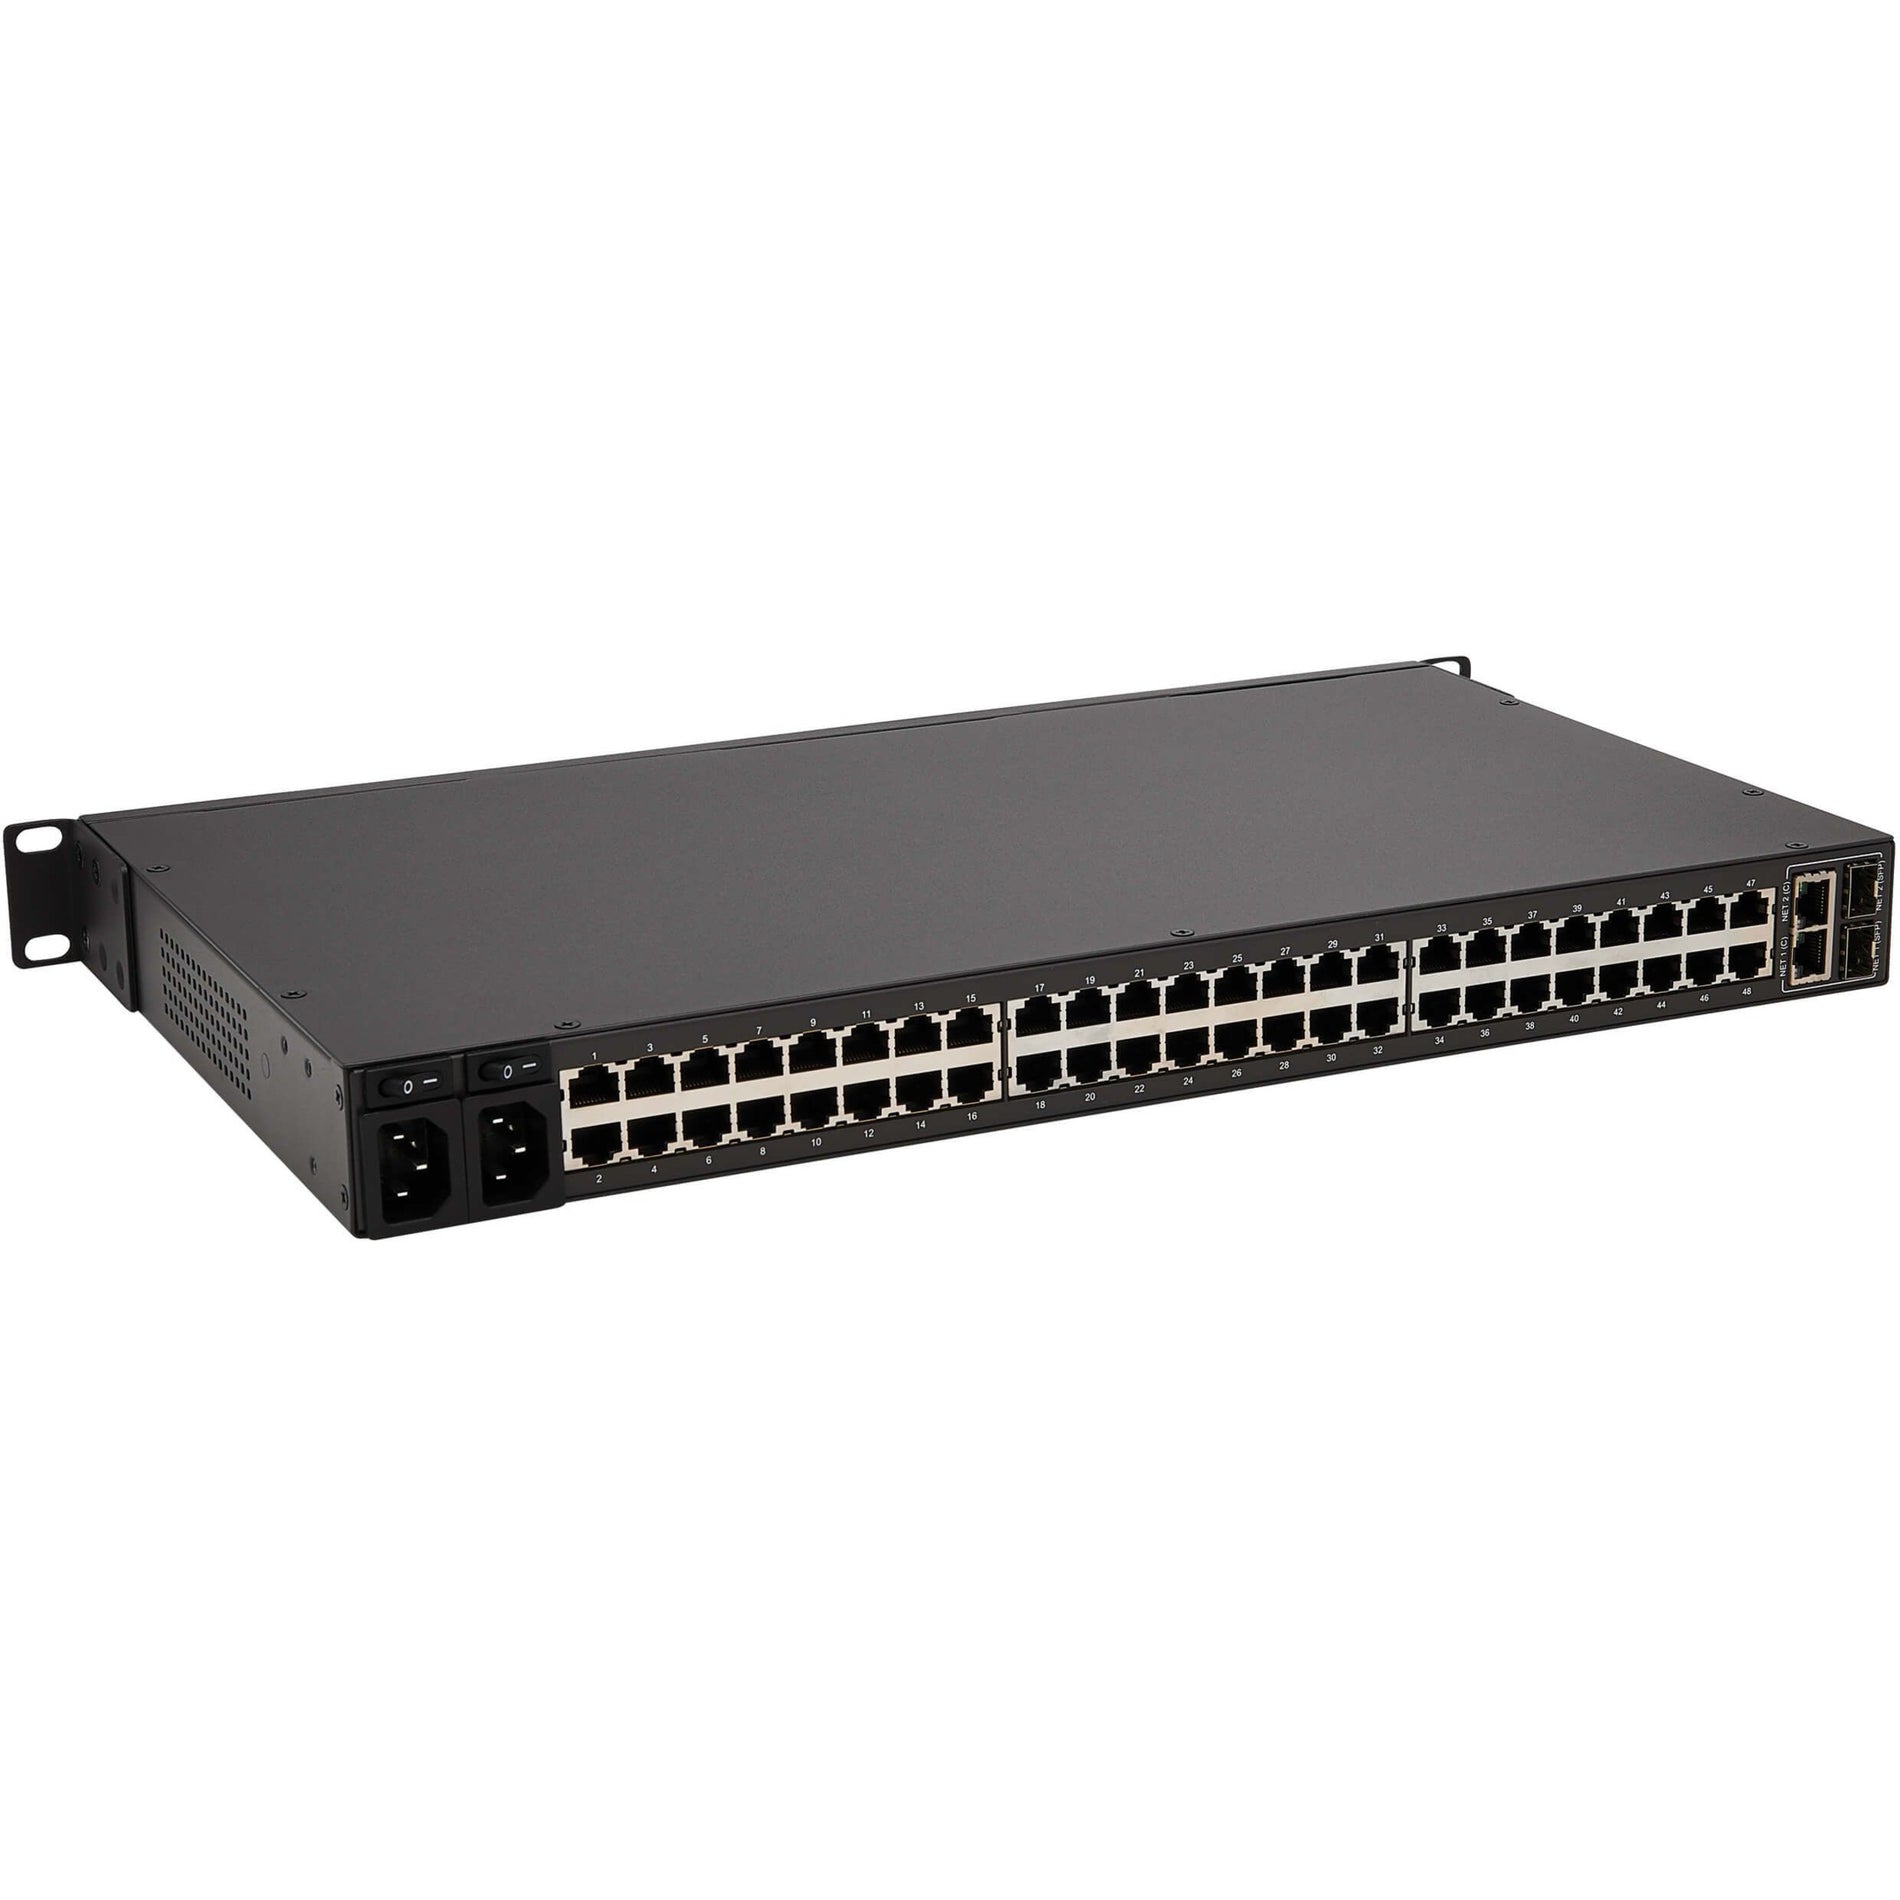 Tripp Lite B098-048 Terminal & Device Server, 48-Port Serial Console Server, TAA Compliant, 4 Year Warranty